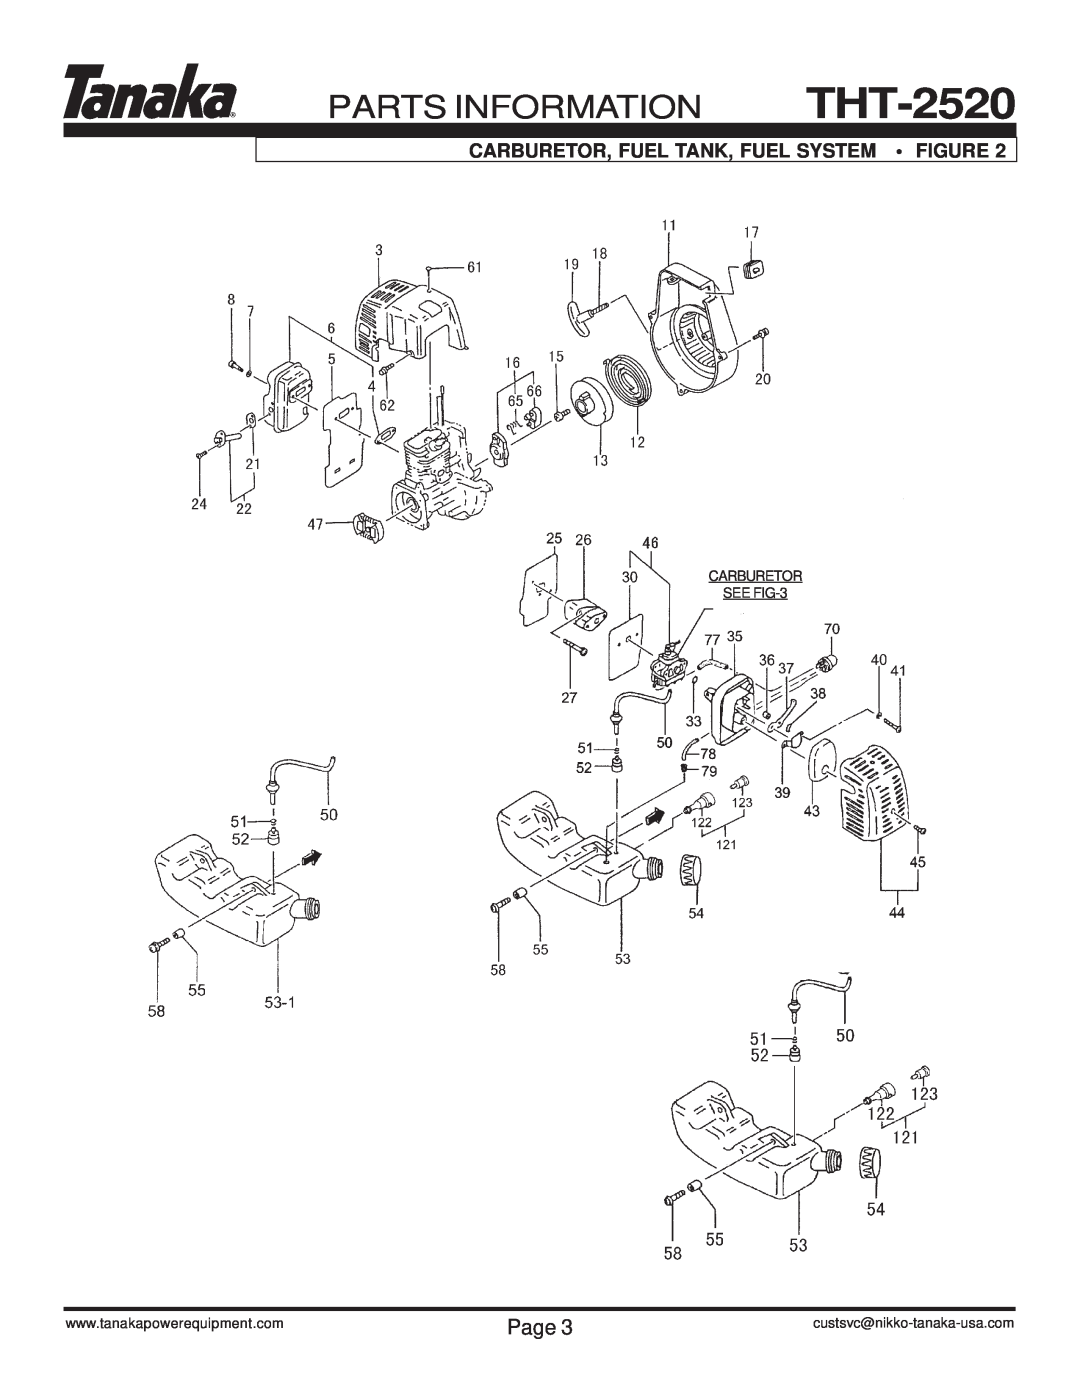 Tanaka THT-2520 manual Parts Information, Carburetor, Fuel Tank, Fuel System Figure, Page, CARBURETOR SEE FIG-3 